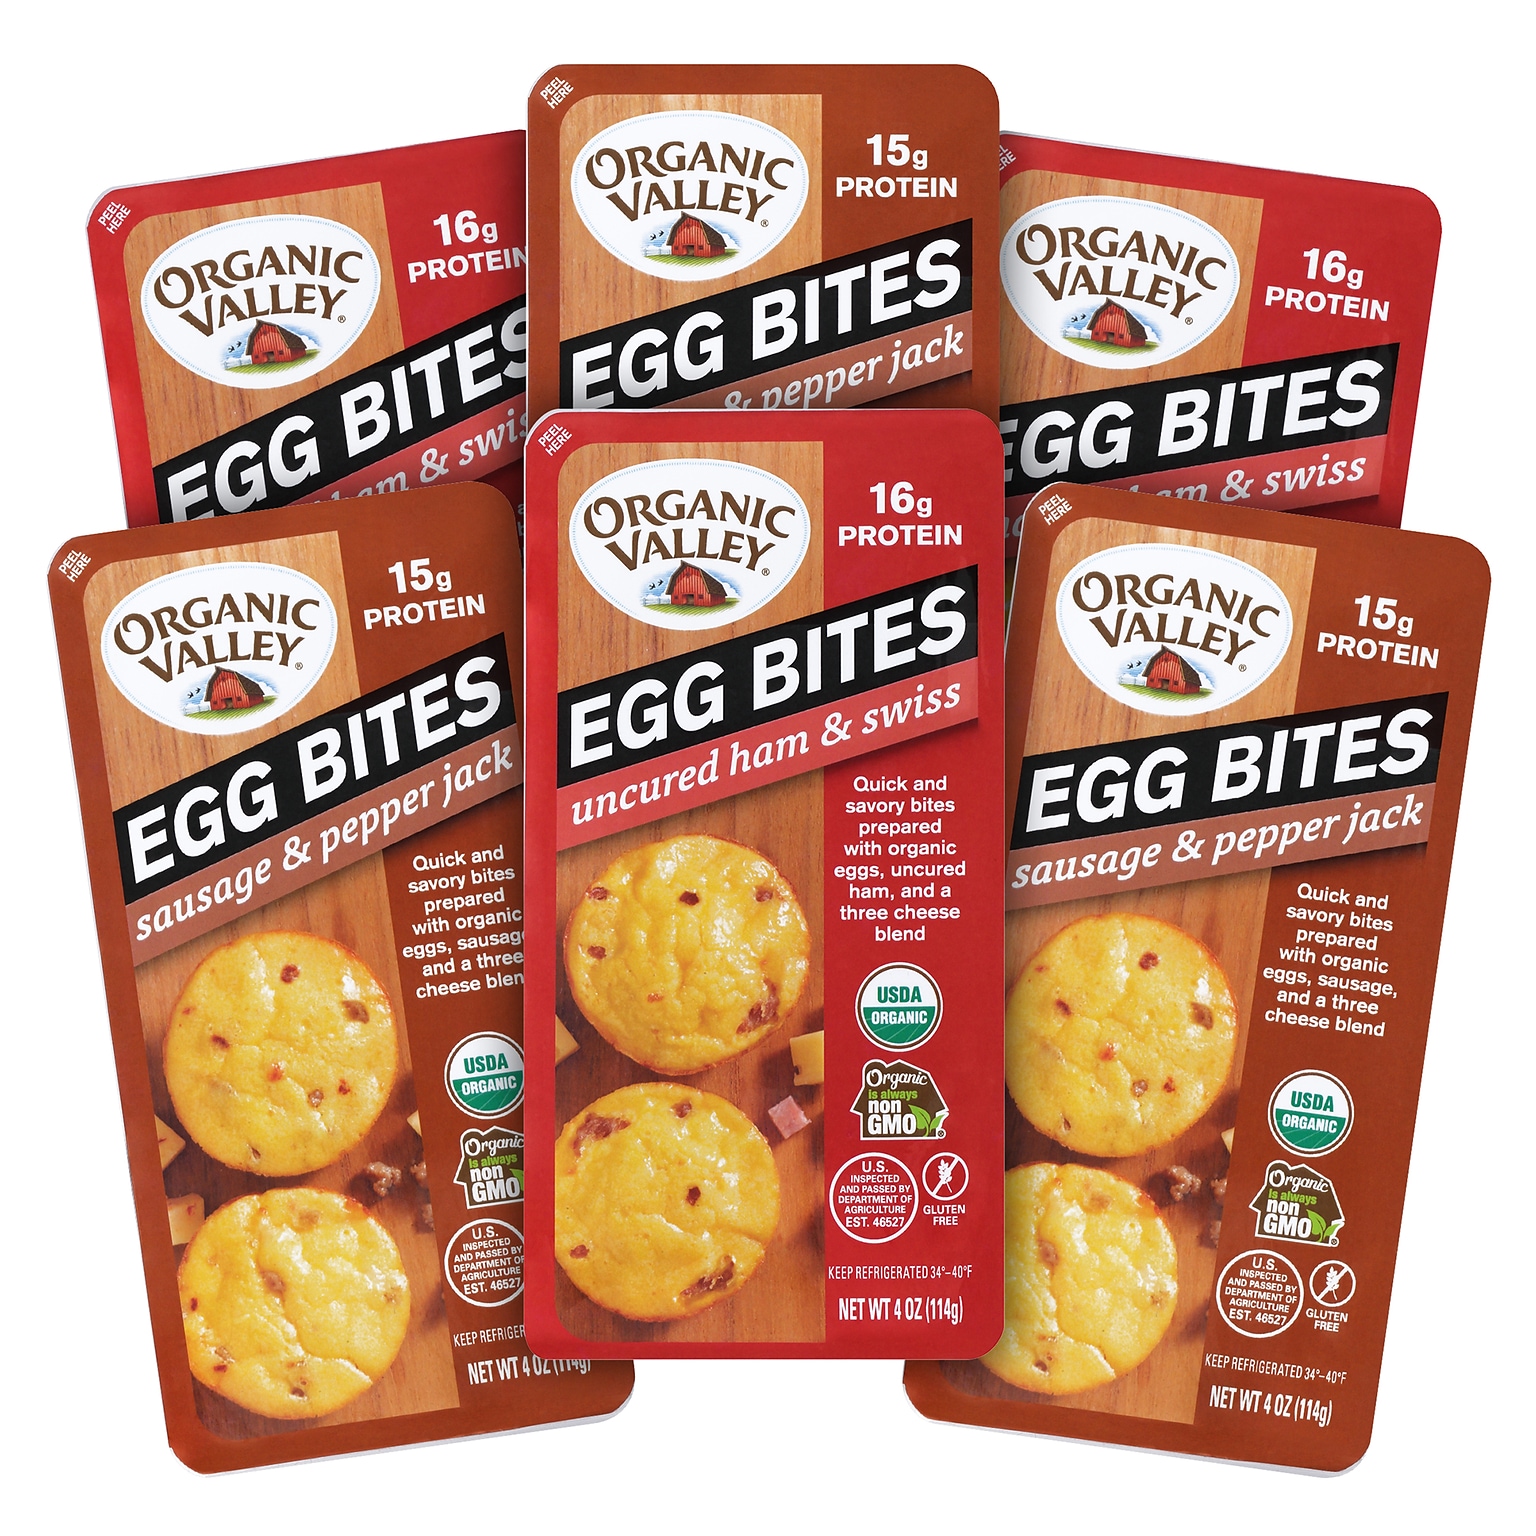 Organic Valley Egg Bites Variety Pack, 4oz, 6/Carton (600-03001)